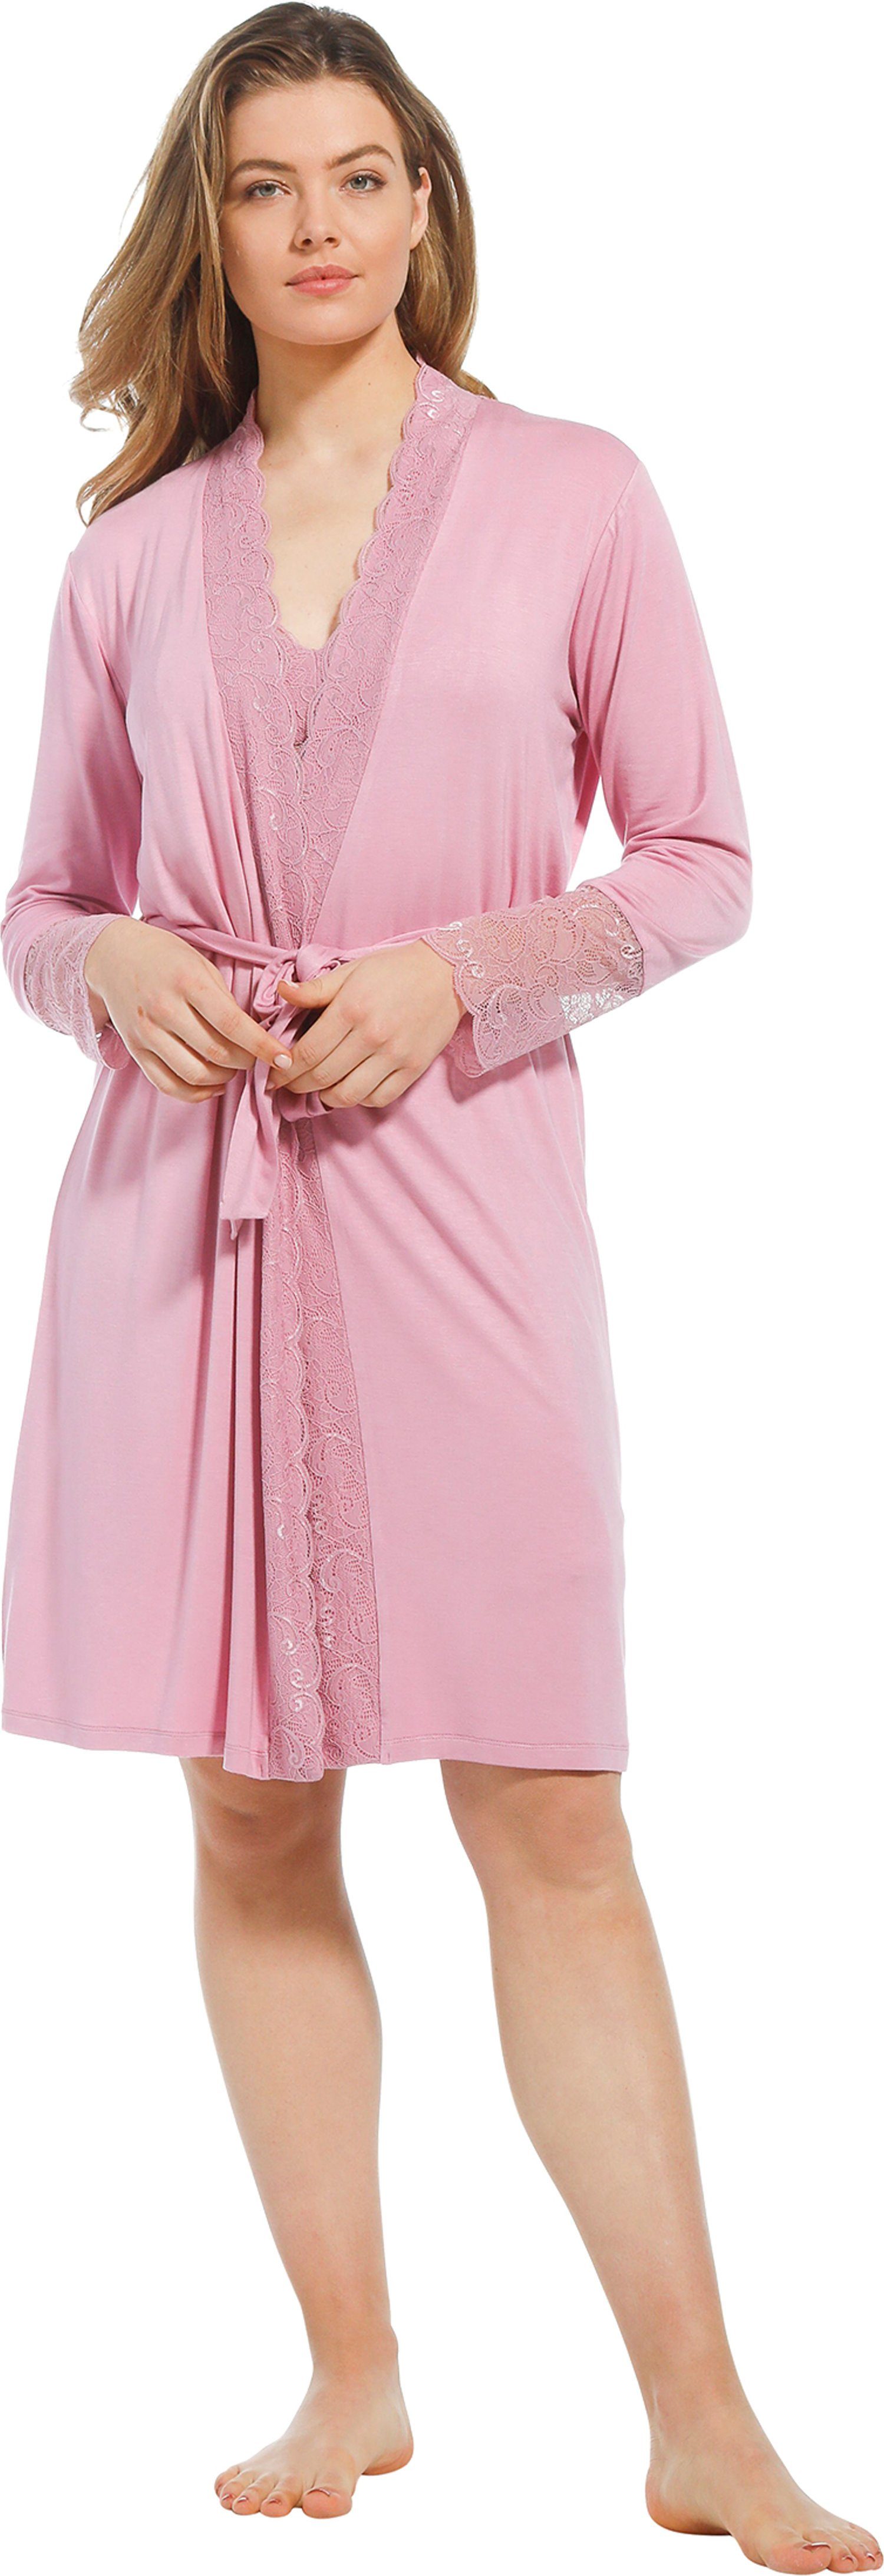 Pastunette Kimono Damen Morgenmantel mit Spitze, kurz, Viskosemischung, Kimono-Kragen, Gürtel, Edles Design light pink